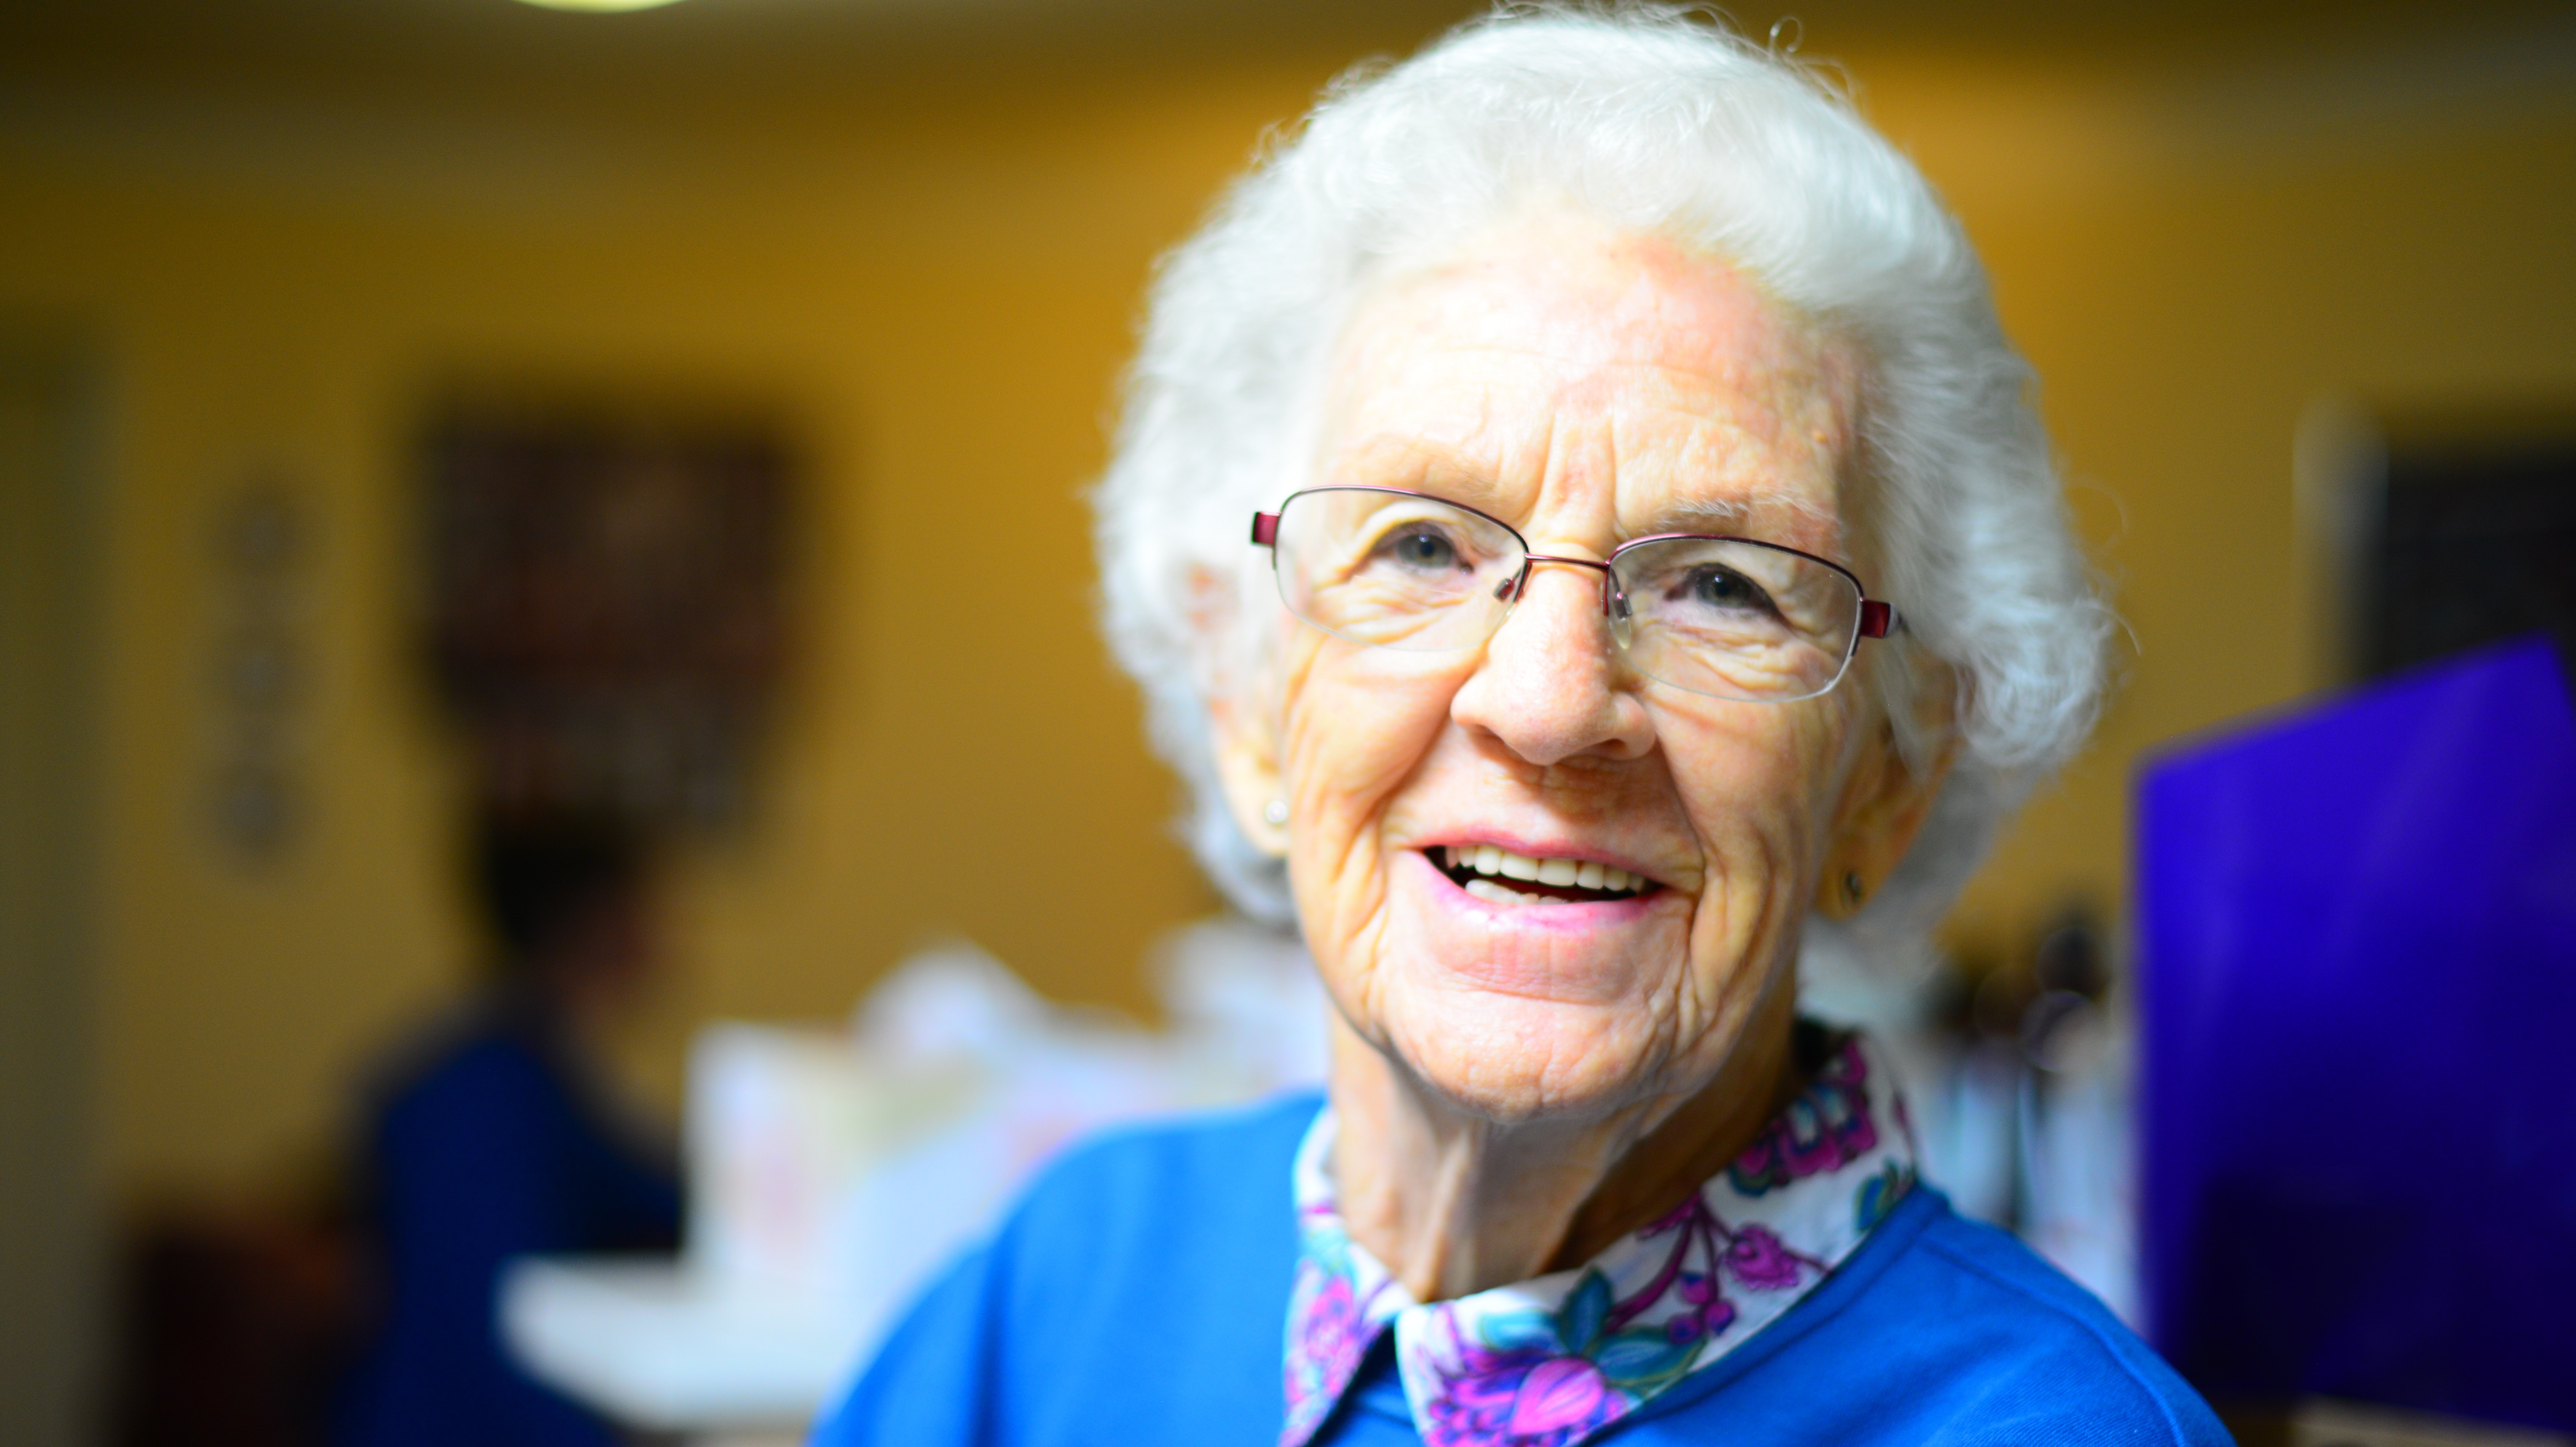 smiling elderly woman